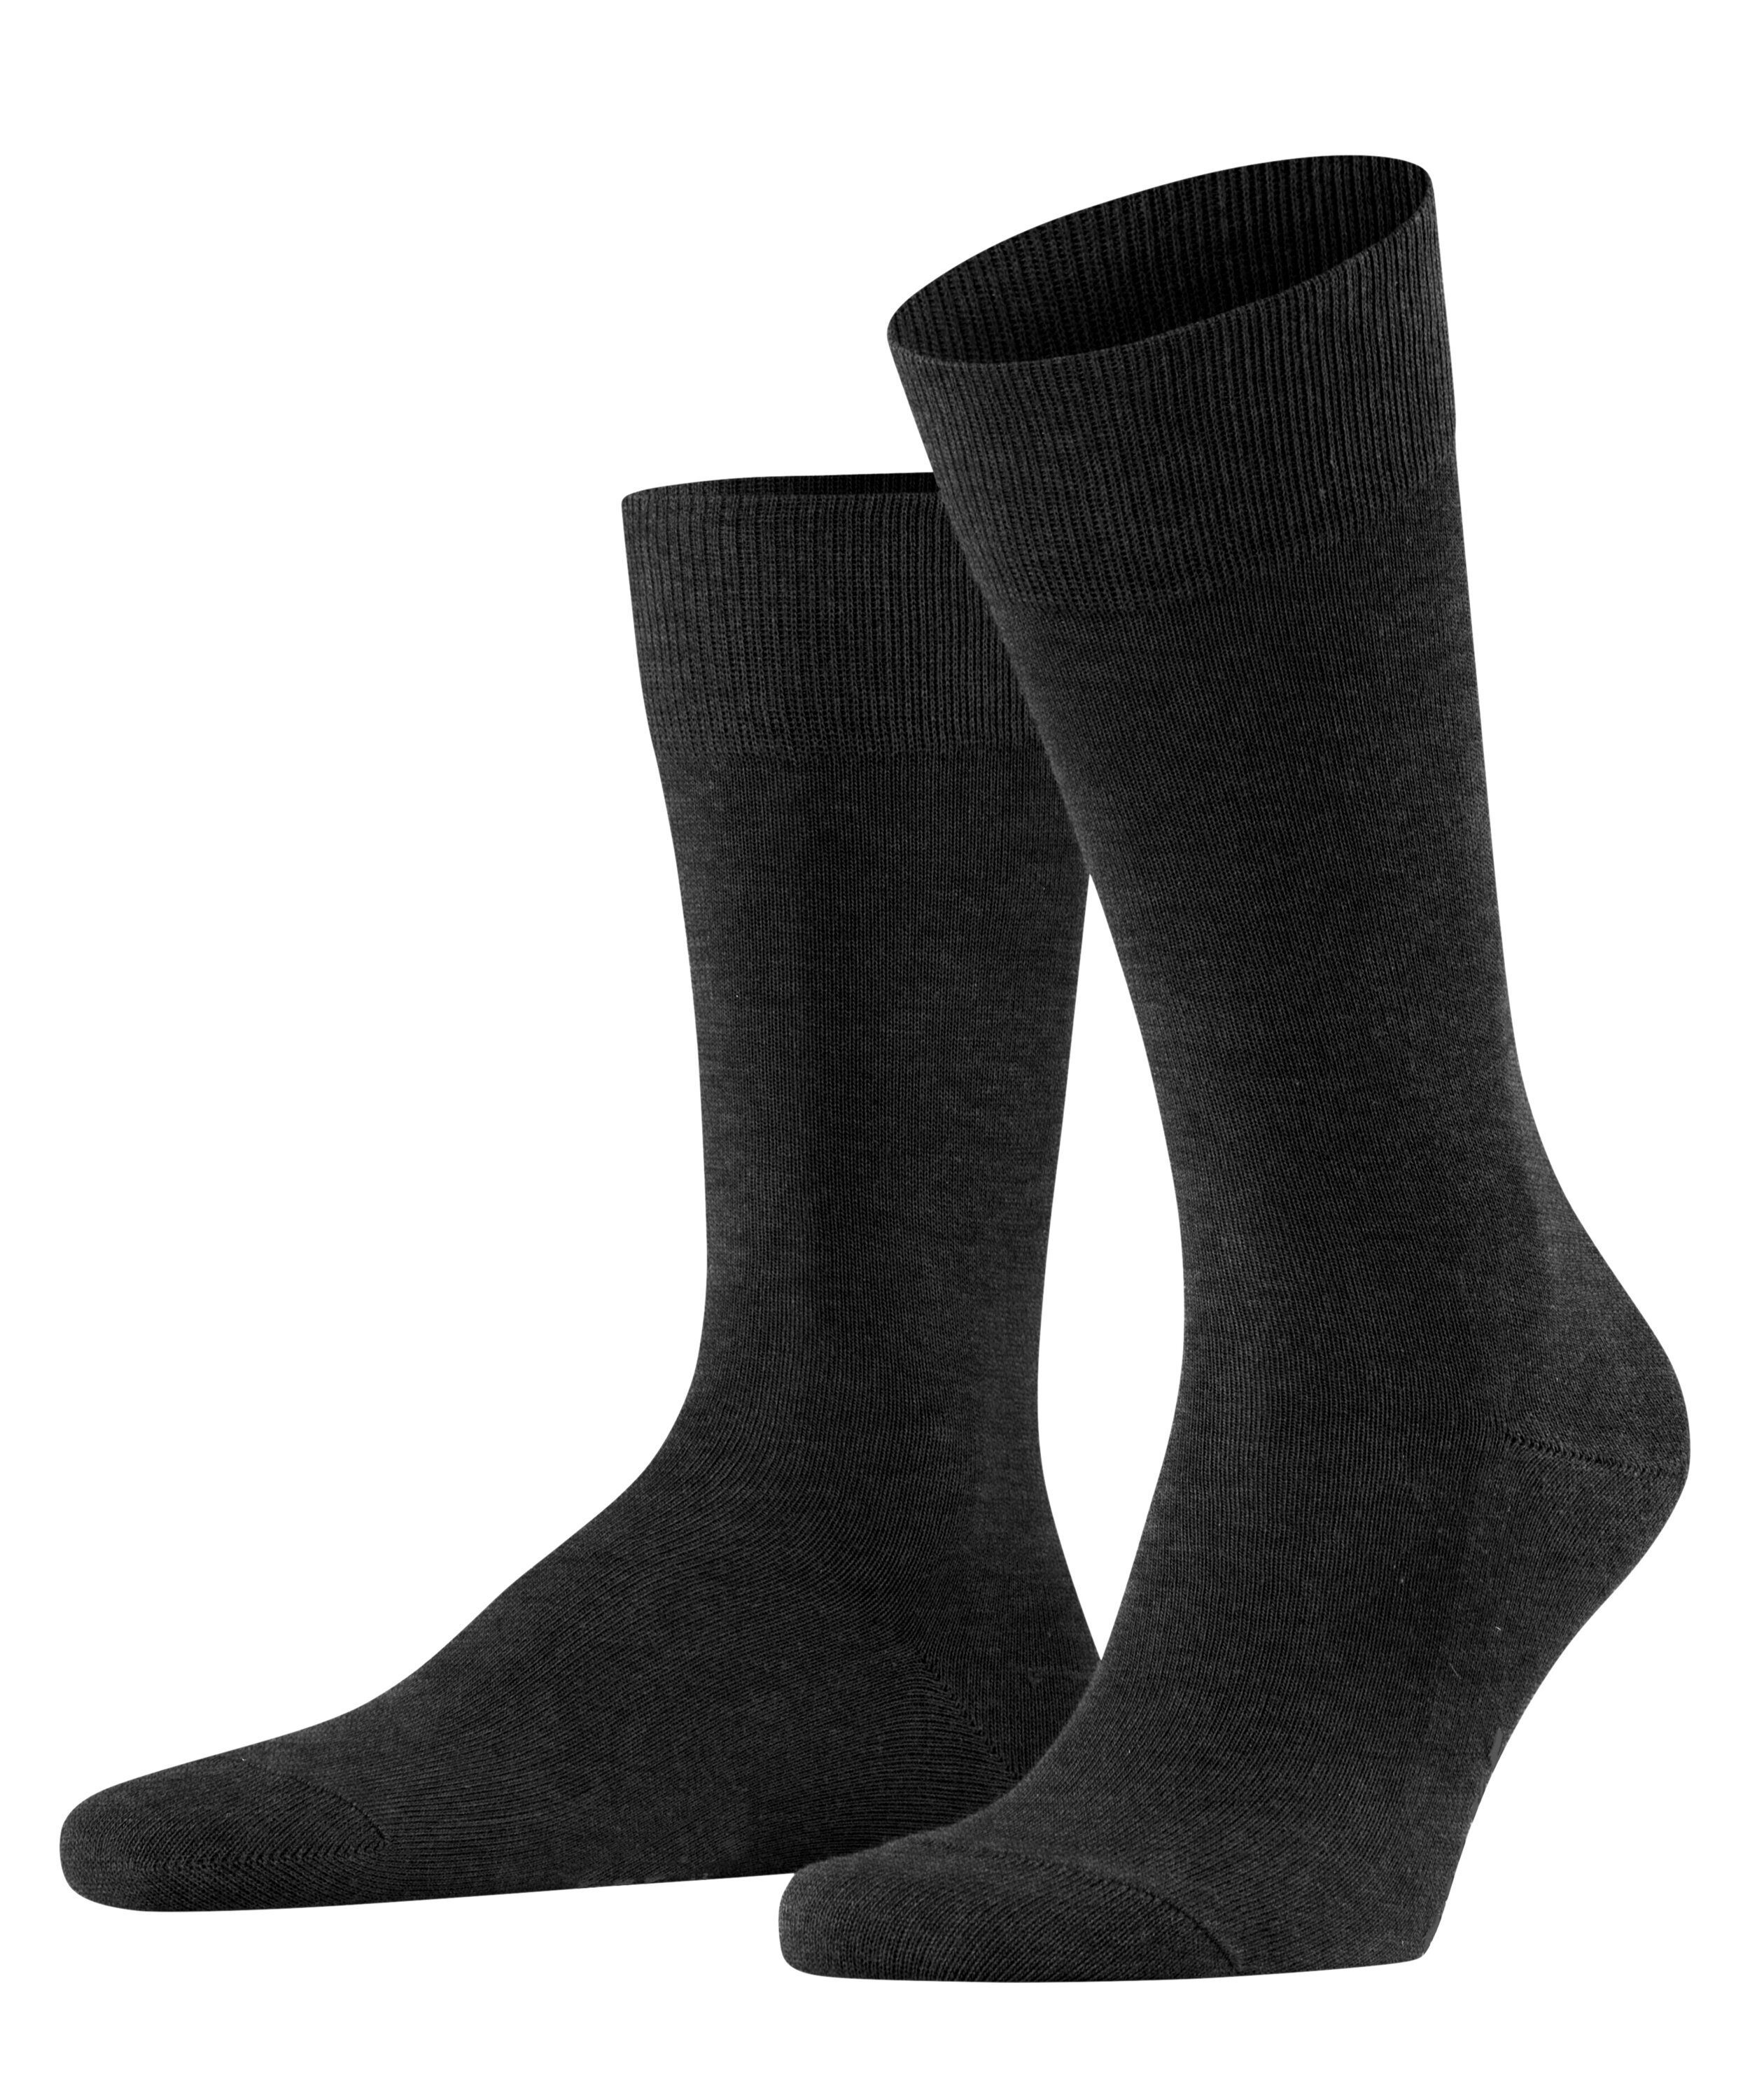 (1-Paar) Socken anthra.mel Family FALKE (3080)